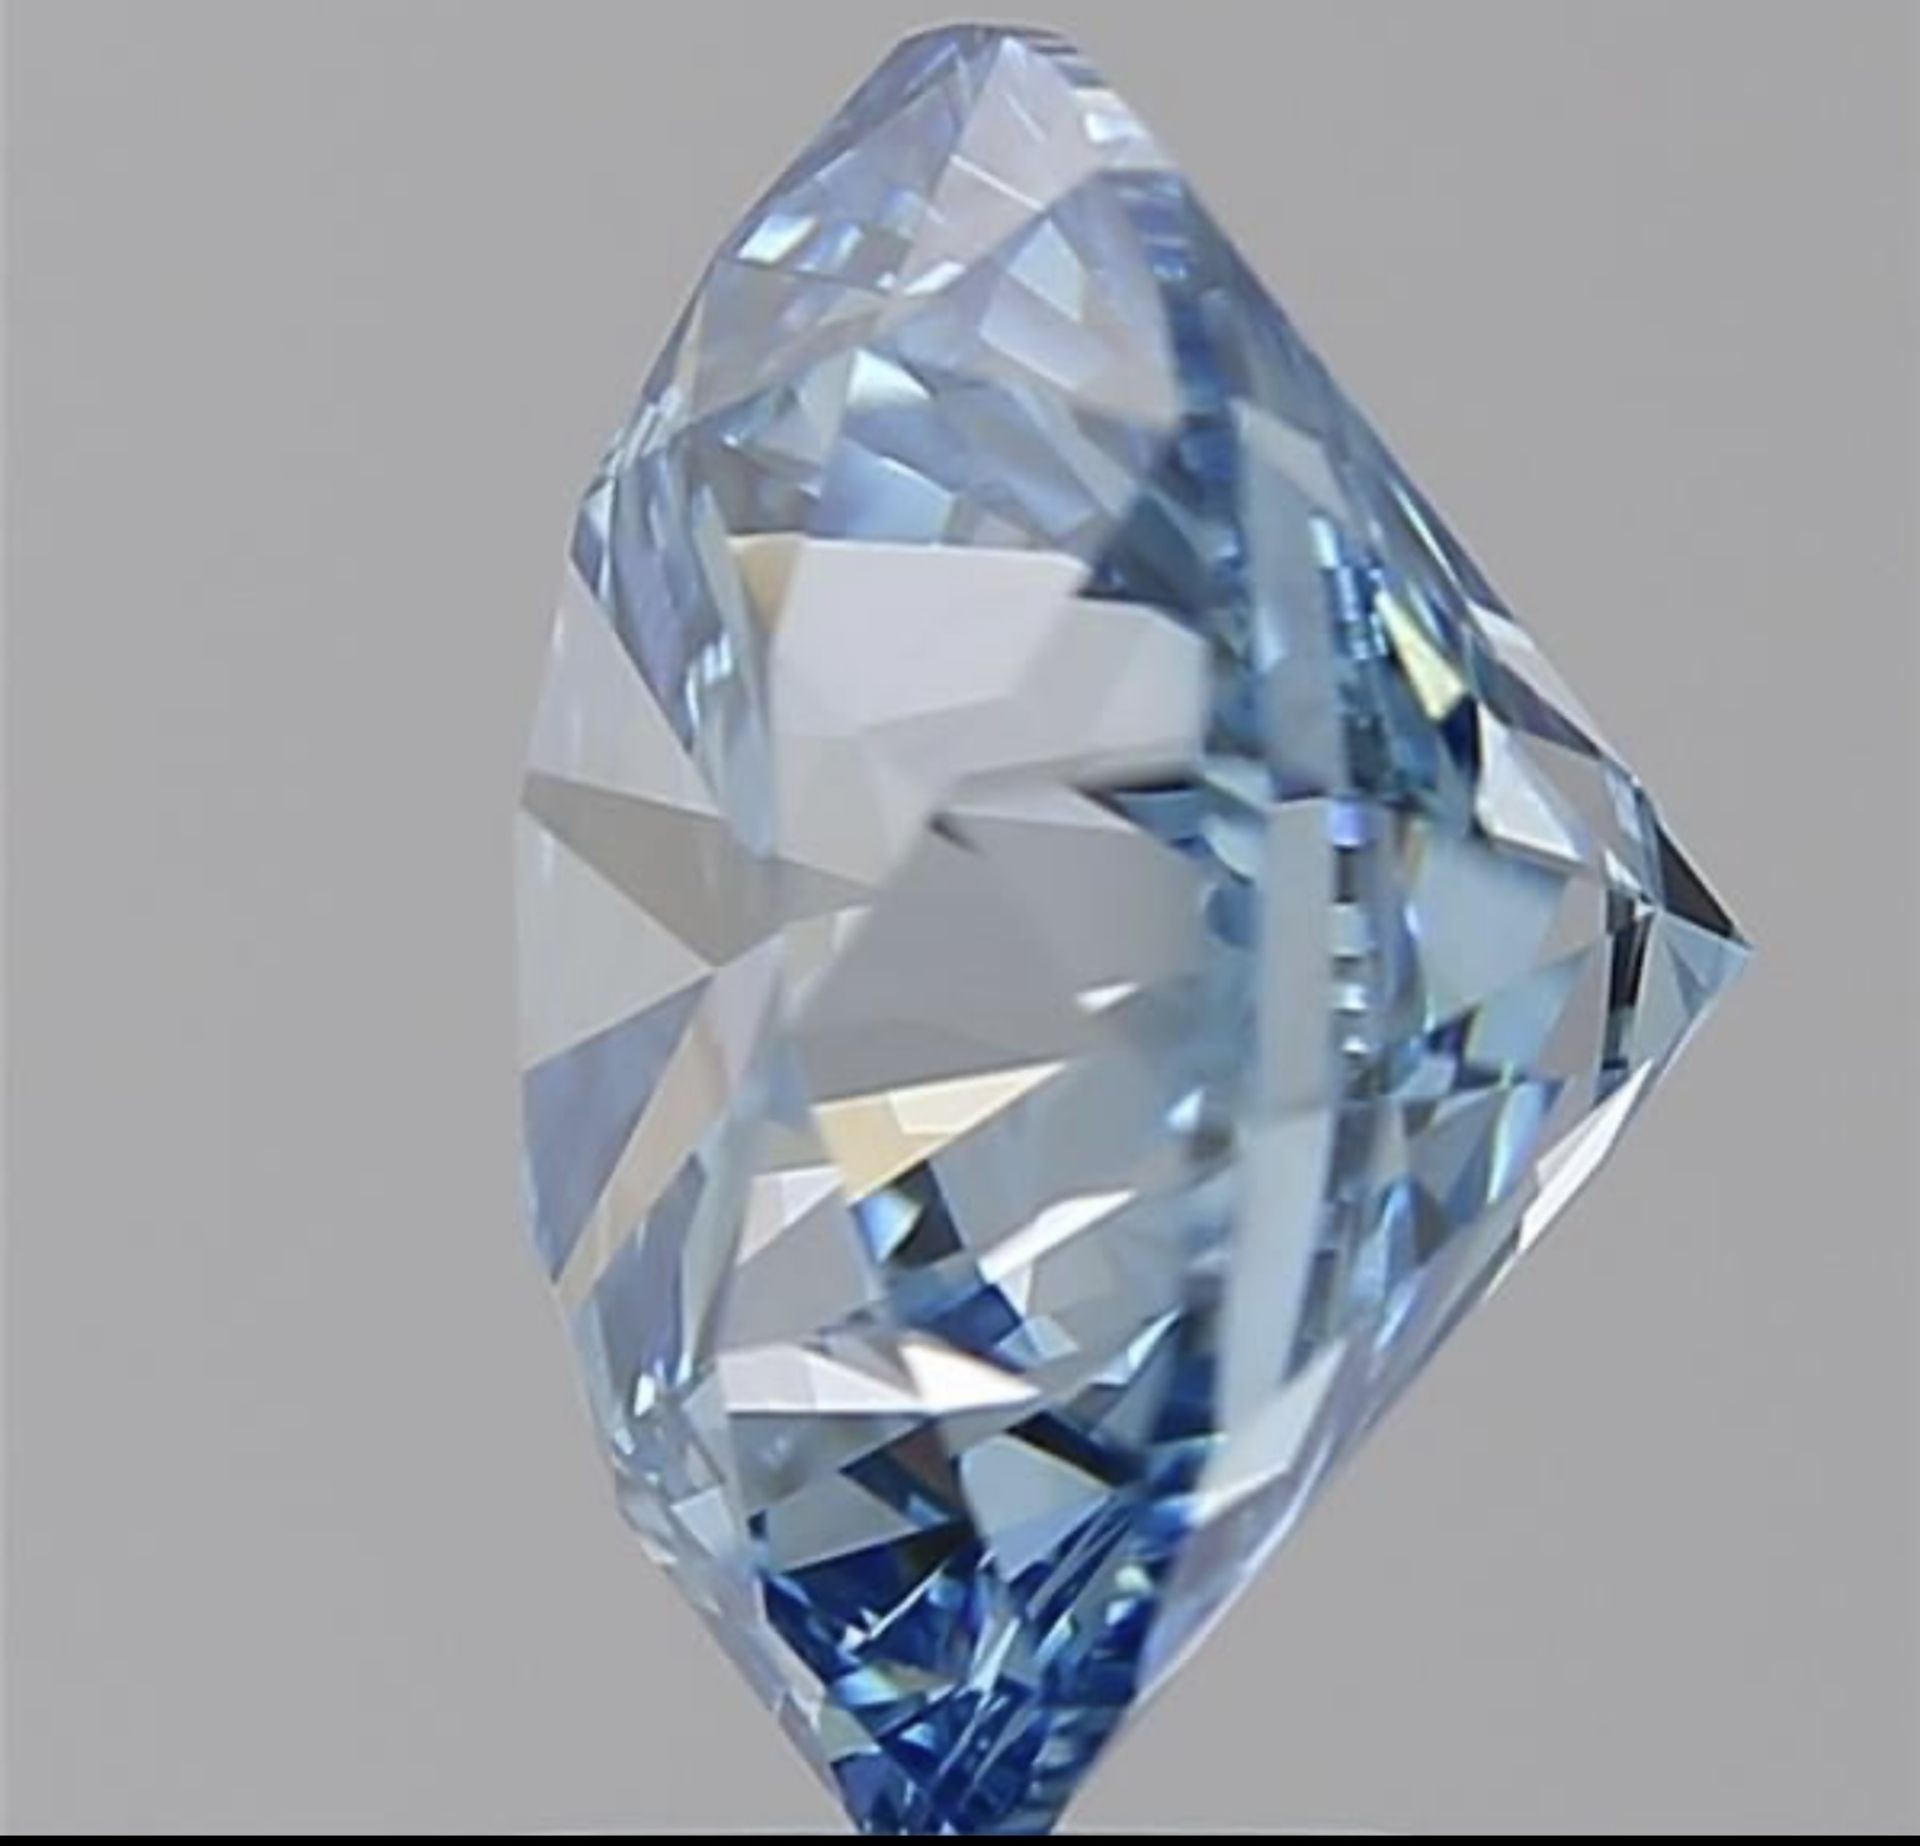 Round Brilliant Cut Diamond 5.01 Carat Fancy Blue Colour VVS2 Clarity - IGI Certificate - Image 2 of 9